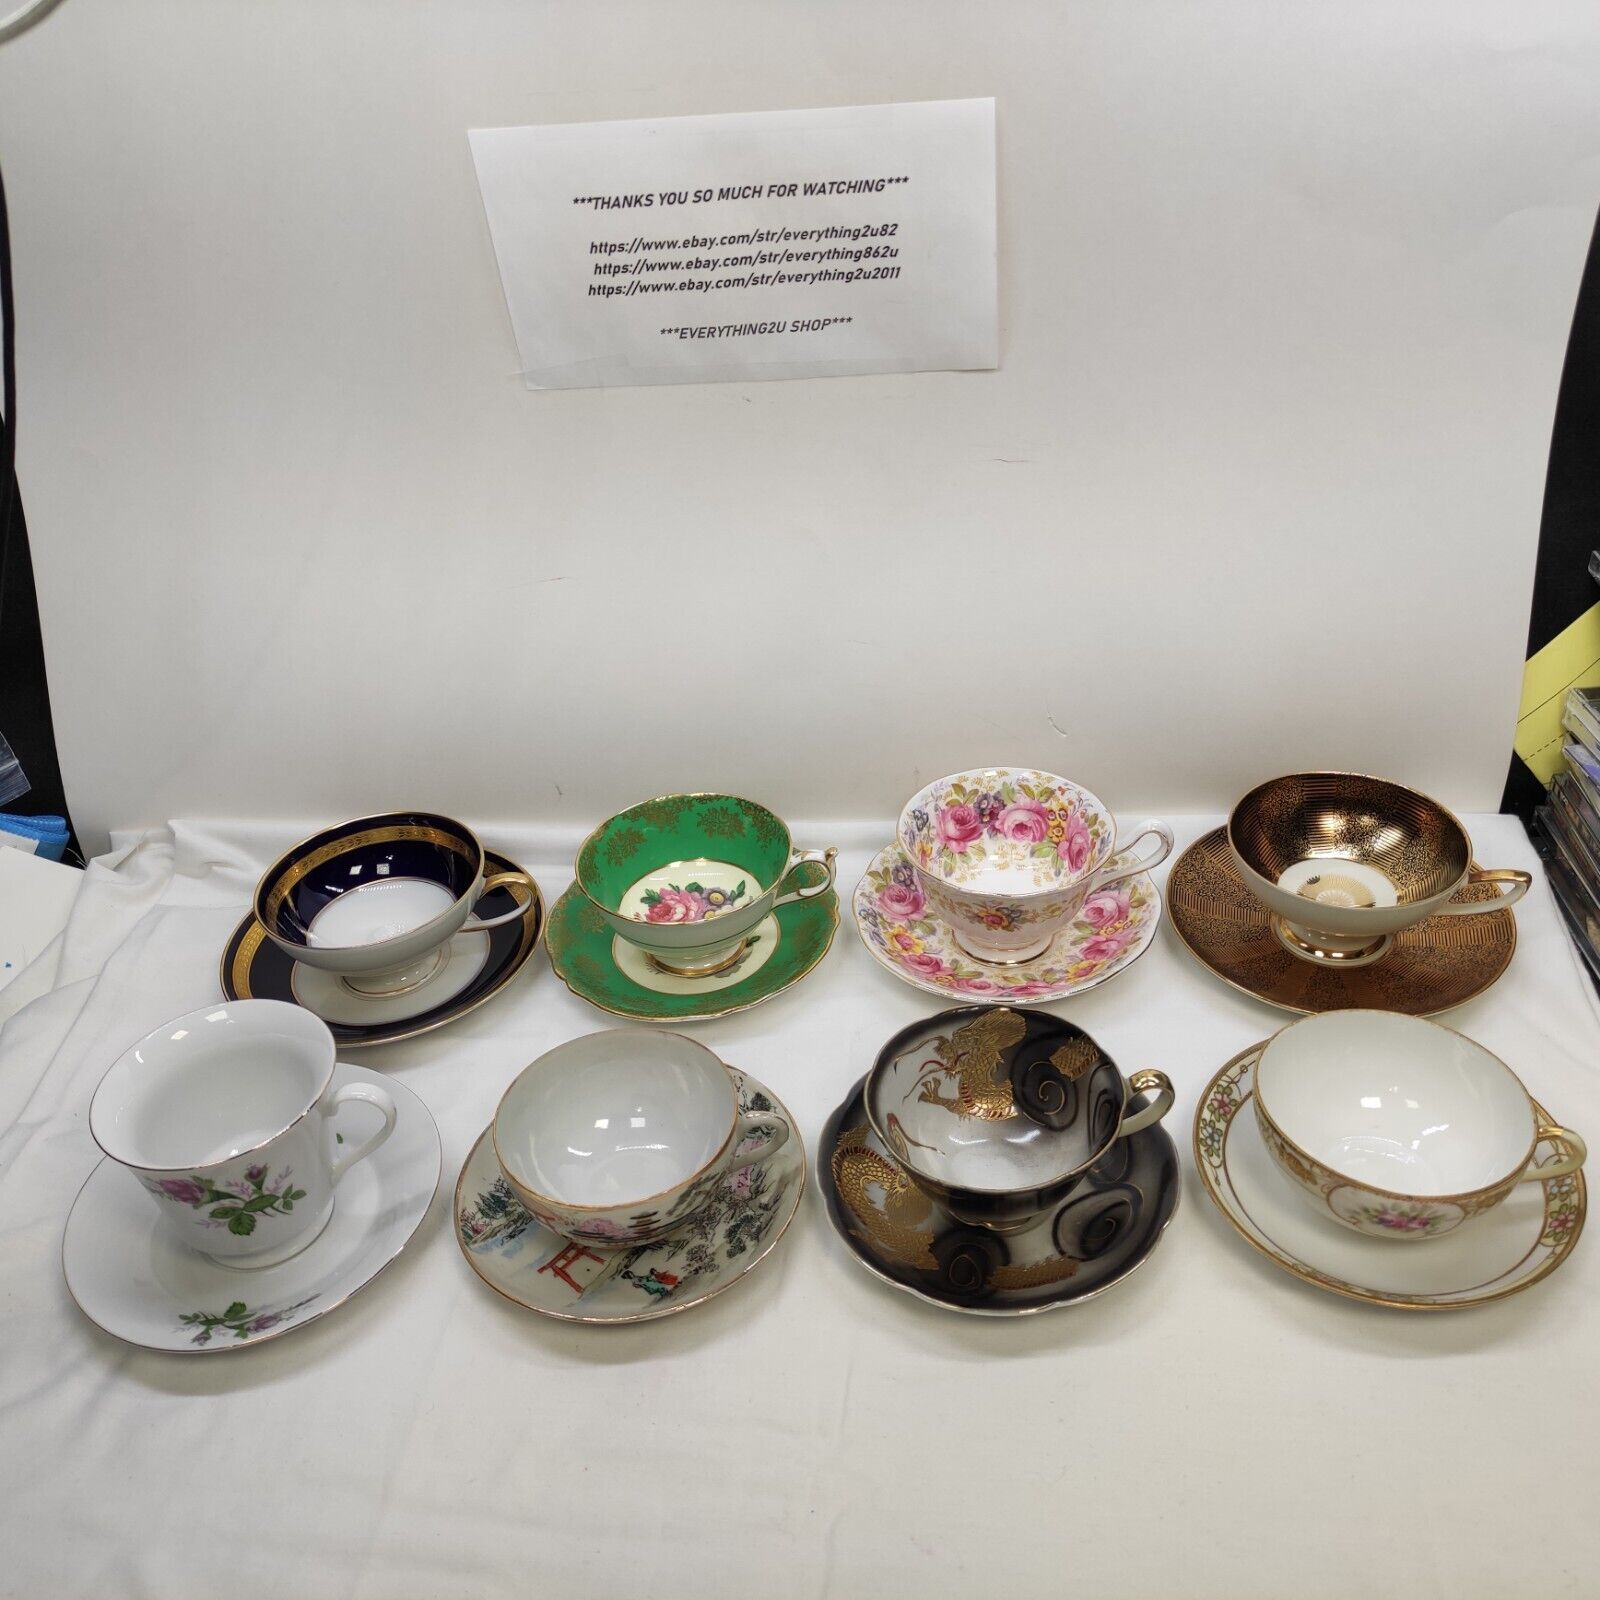 8 Vintage Tea Party Cup Saucers Paragon, Royal Albert, Rosenthal,Japanese, China